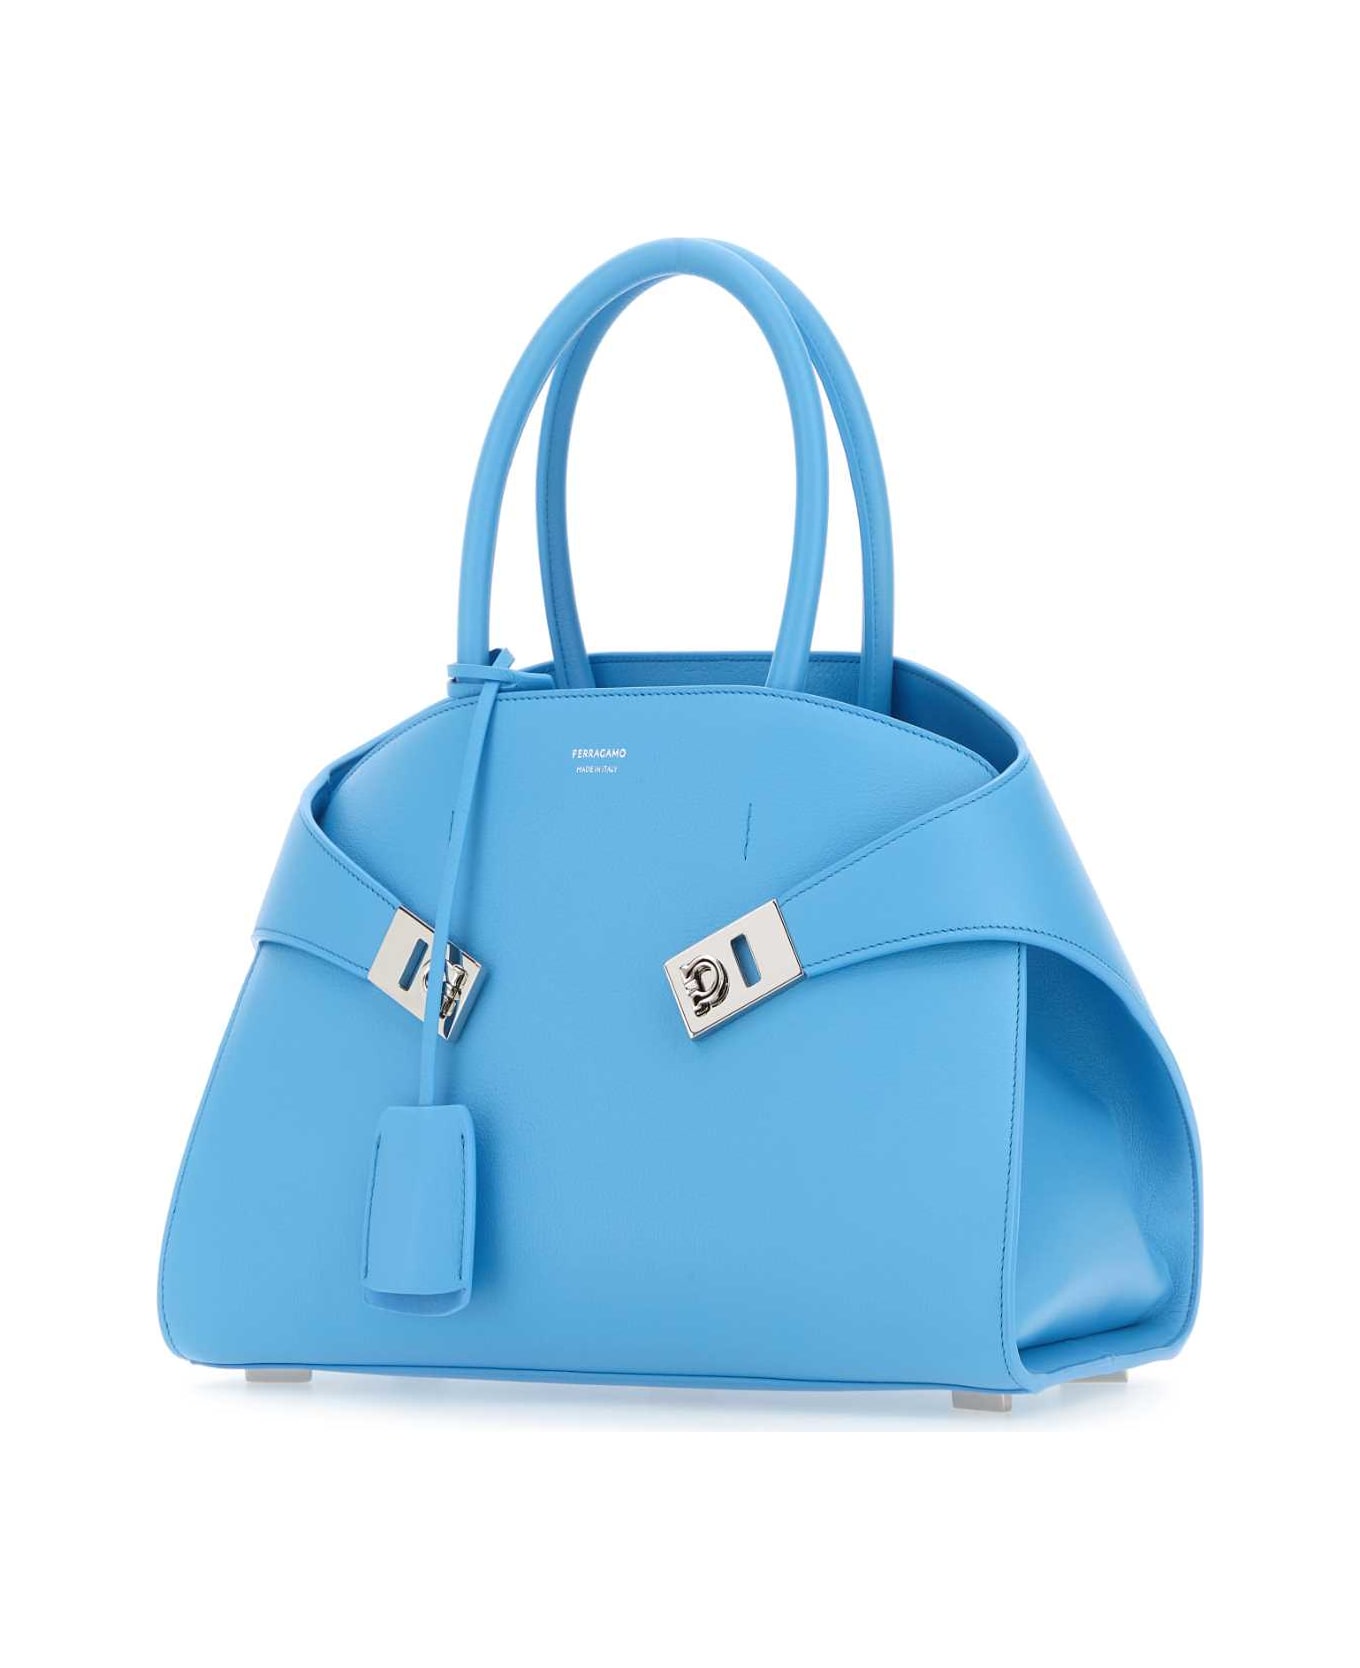 Ferragamo Turquoise Leather Small Hug Handbag - AZUR